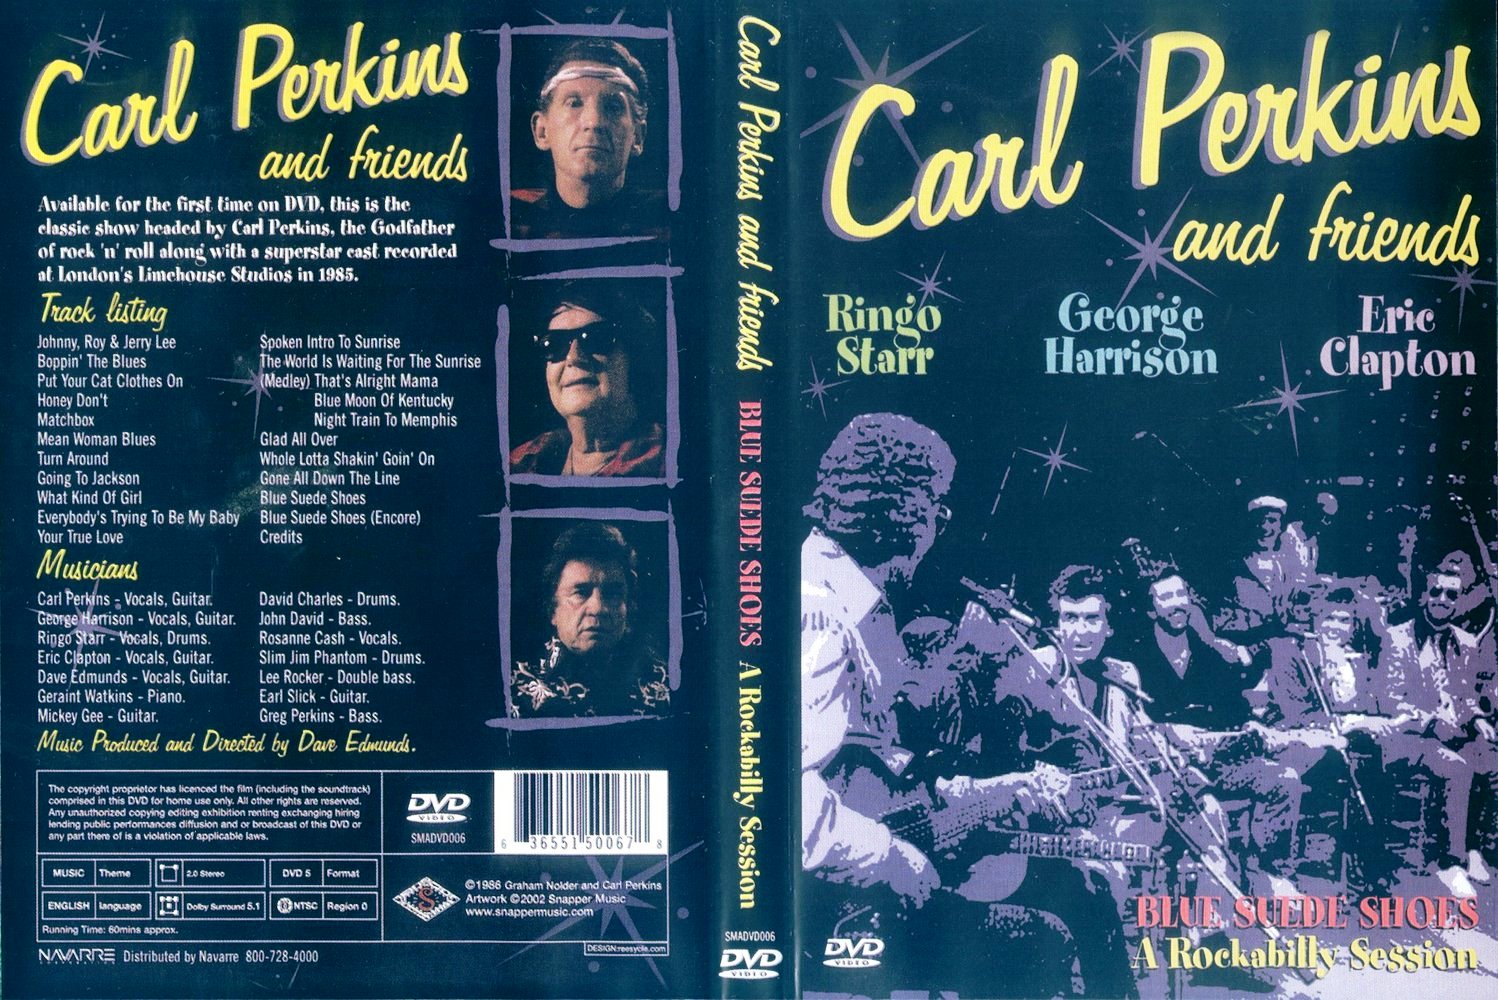 Blue friends. Carl Perkins & friends - Blues Suede Shoes - a Rockabilly session. Carl Perkins Blue Suede Shoes. Blue Suede Shoes - a Rockabilly session.